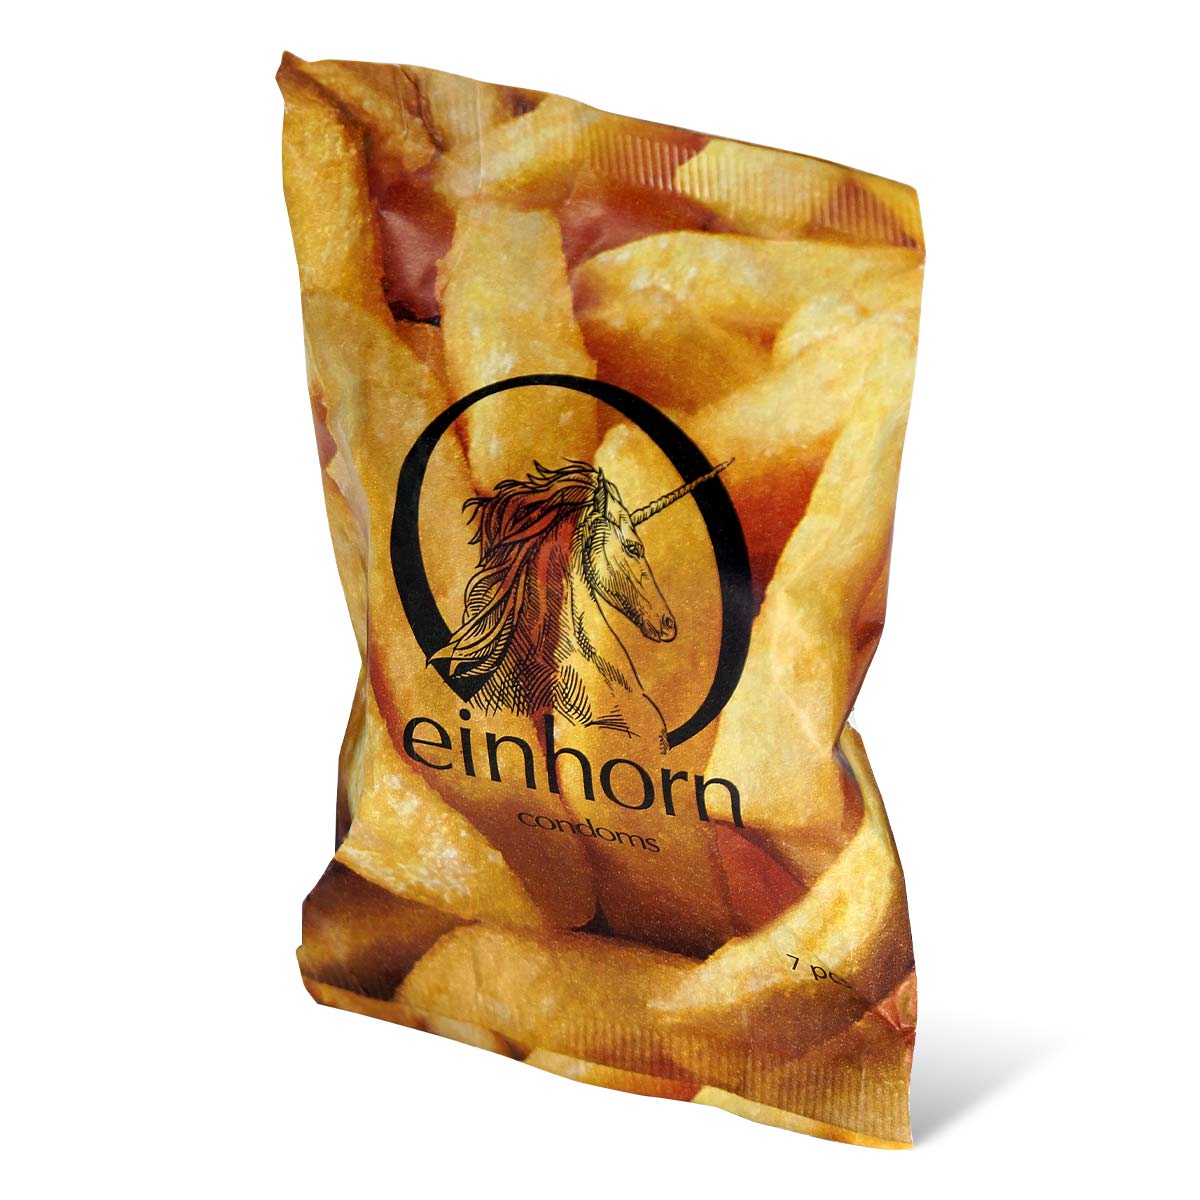 Einhorn Foodporn Vegan Condom 7's Pack Latex Condom-thumb_1